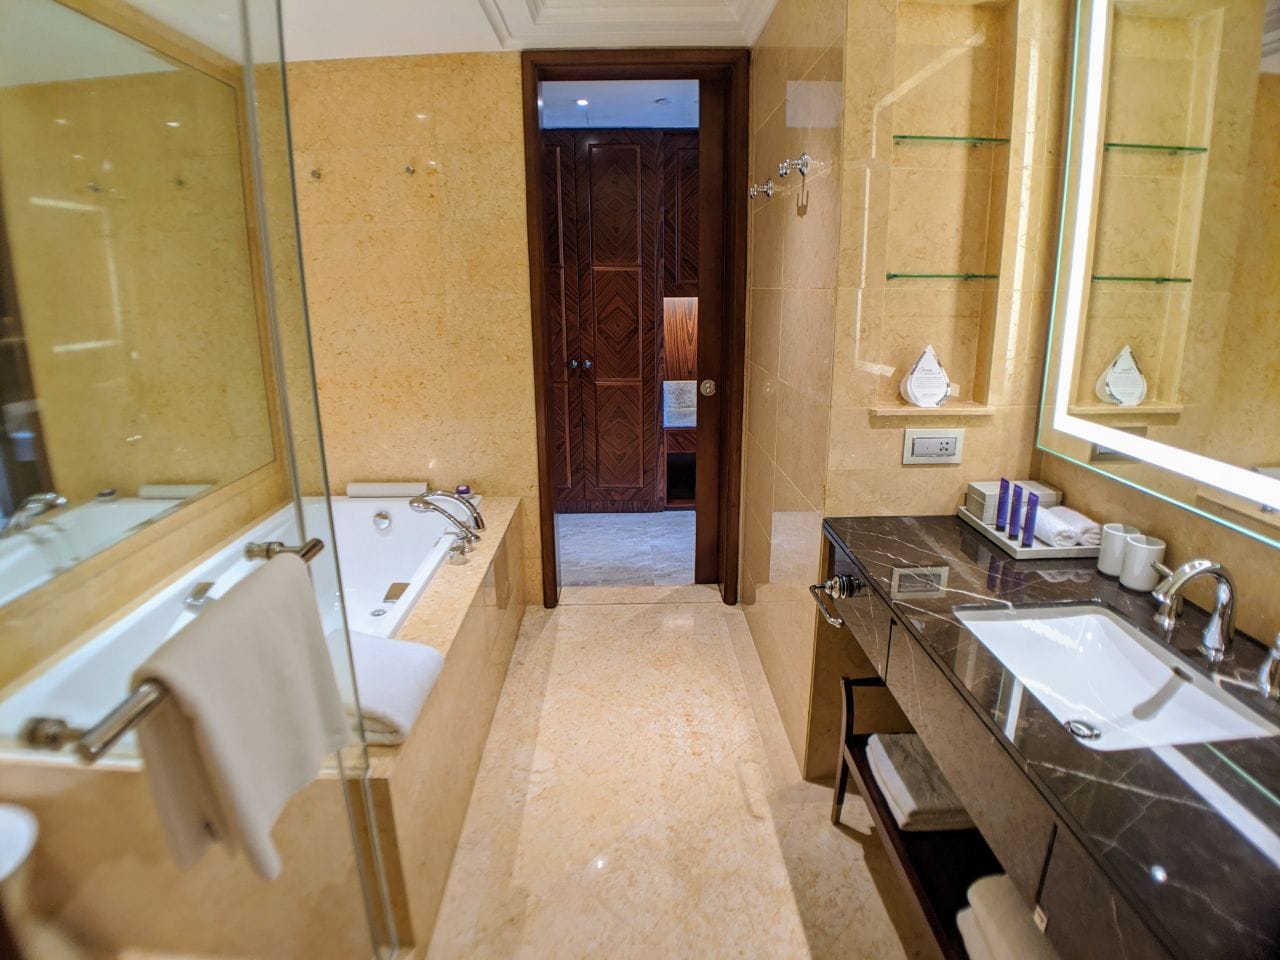 Quay Room bathroom